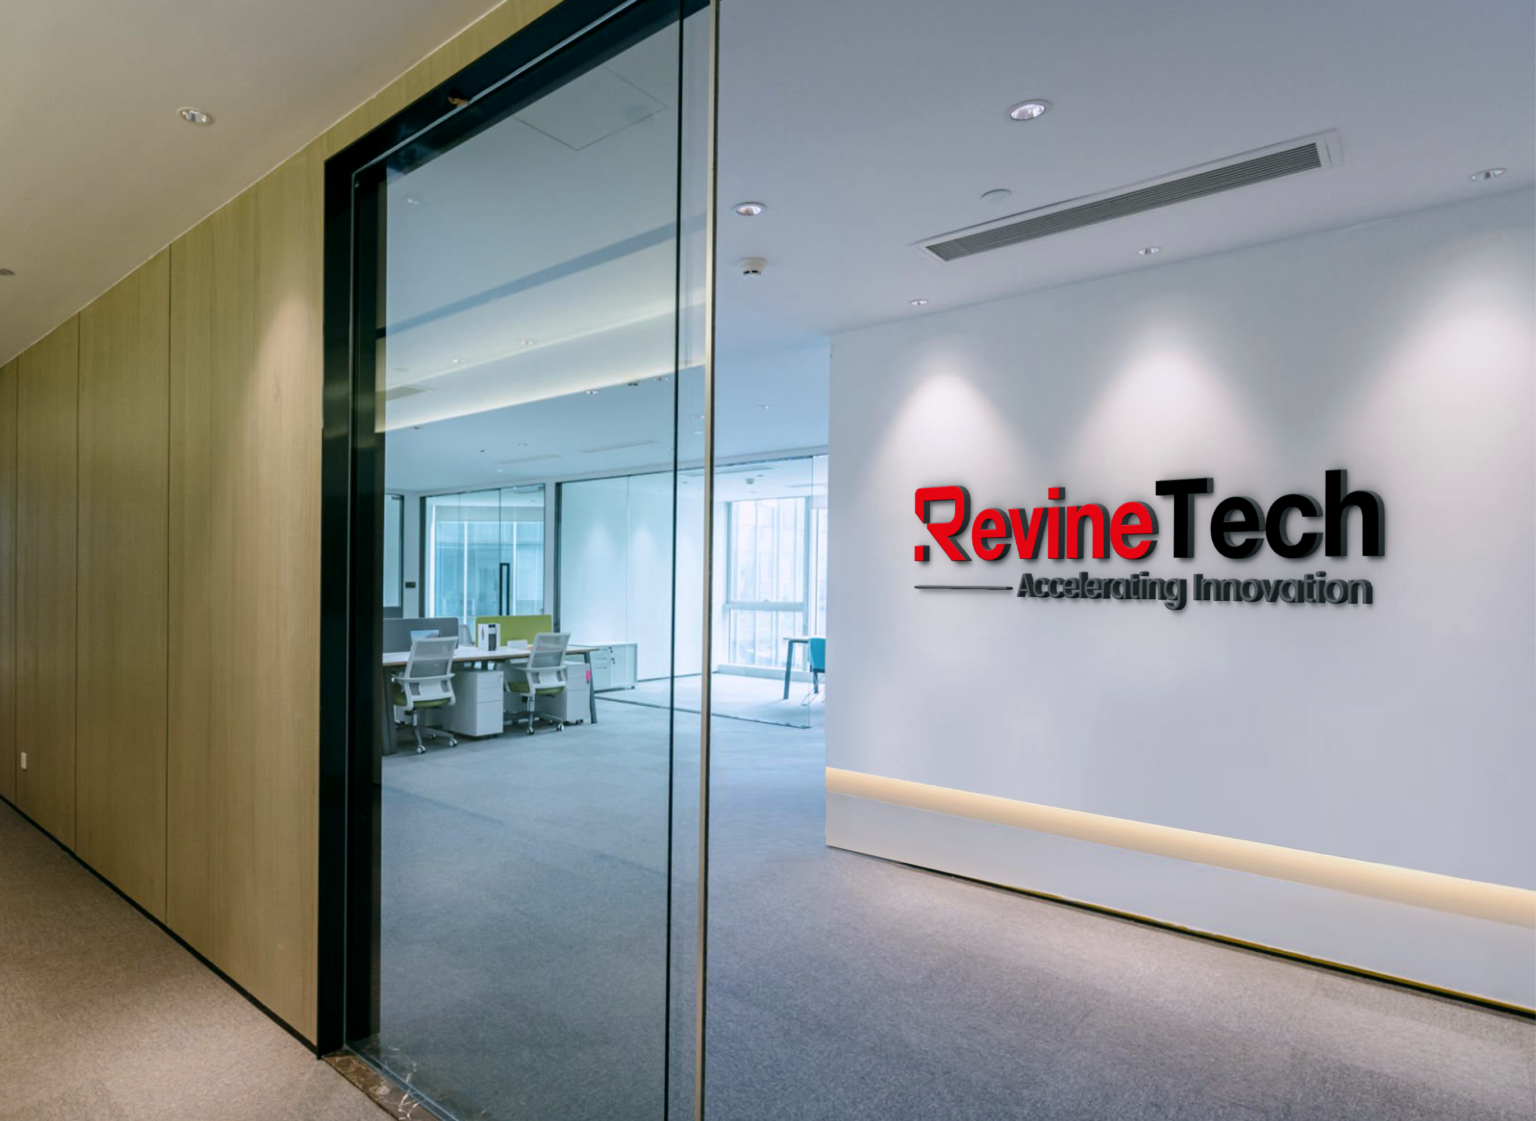 Revine Tech – Accelerating Innovation